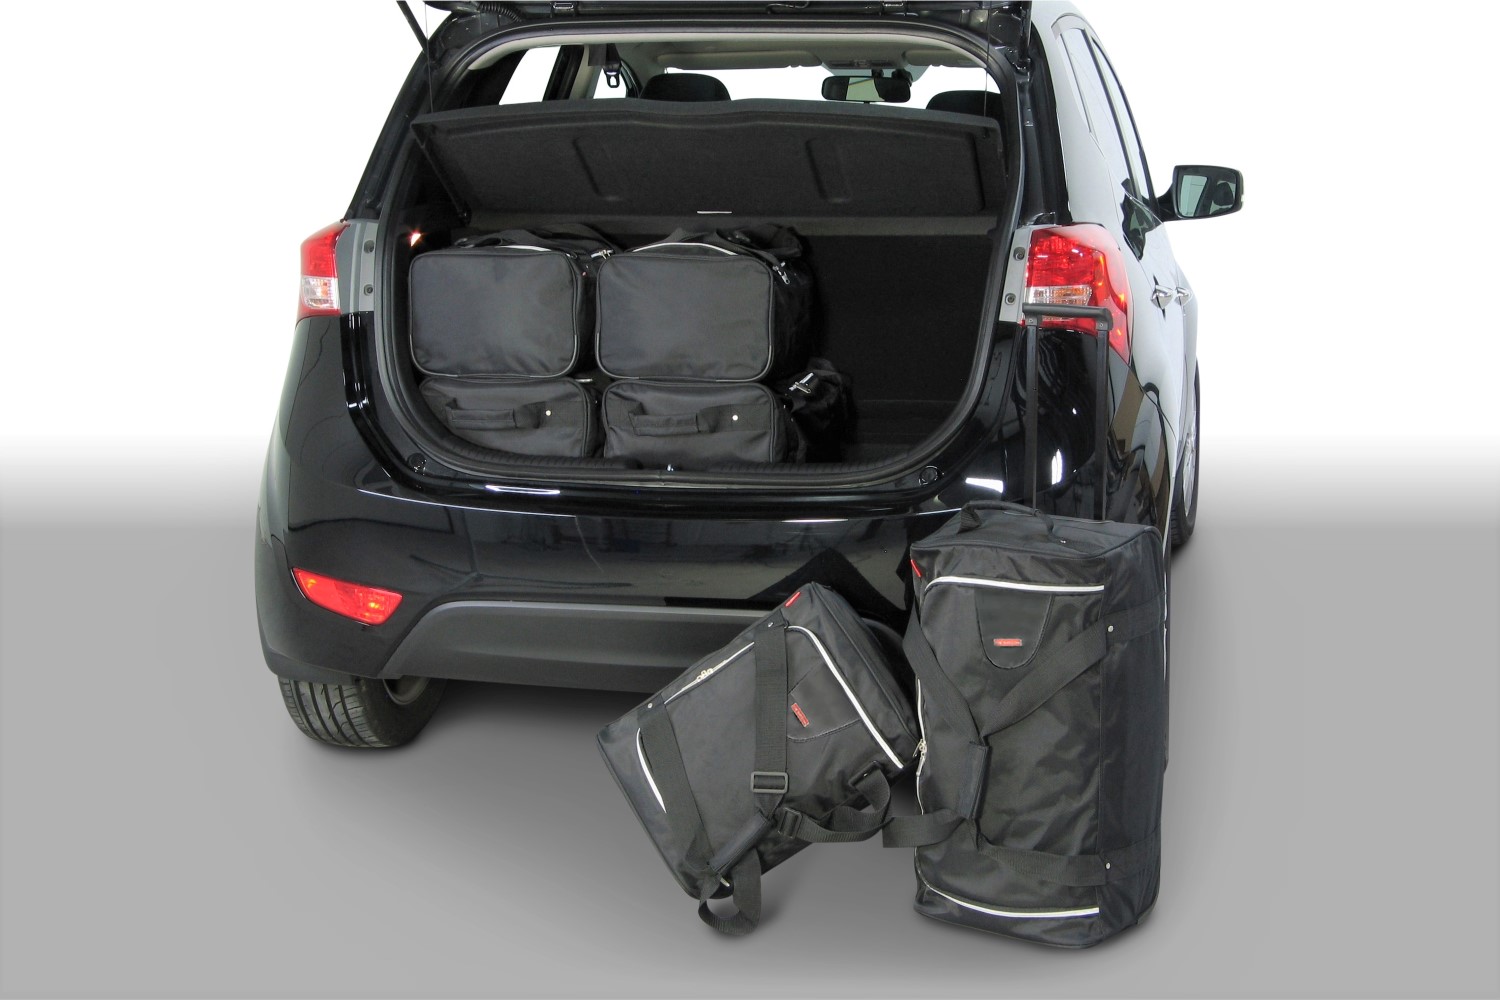 https://www.car-bags.com/images/stories/virtuemart/product/h10301s-hyundai-ix20-10-car-bags-1.jpg